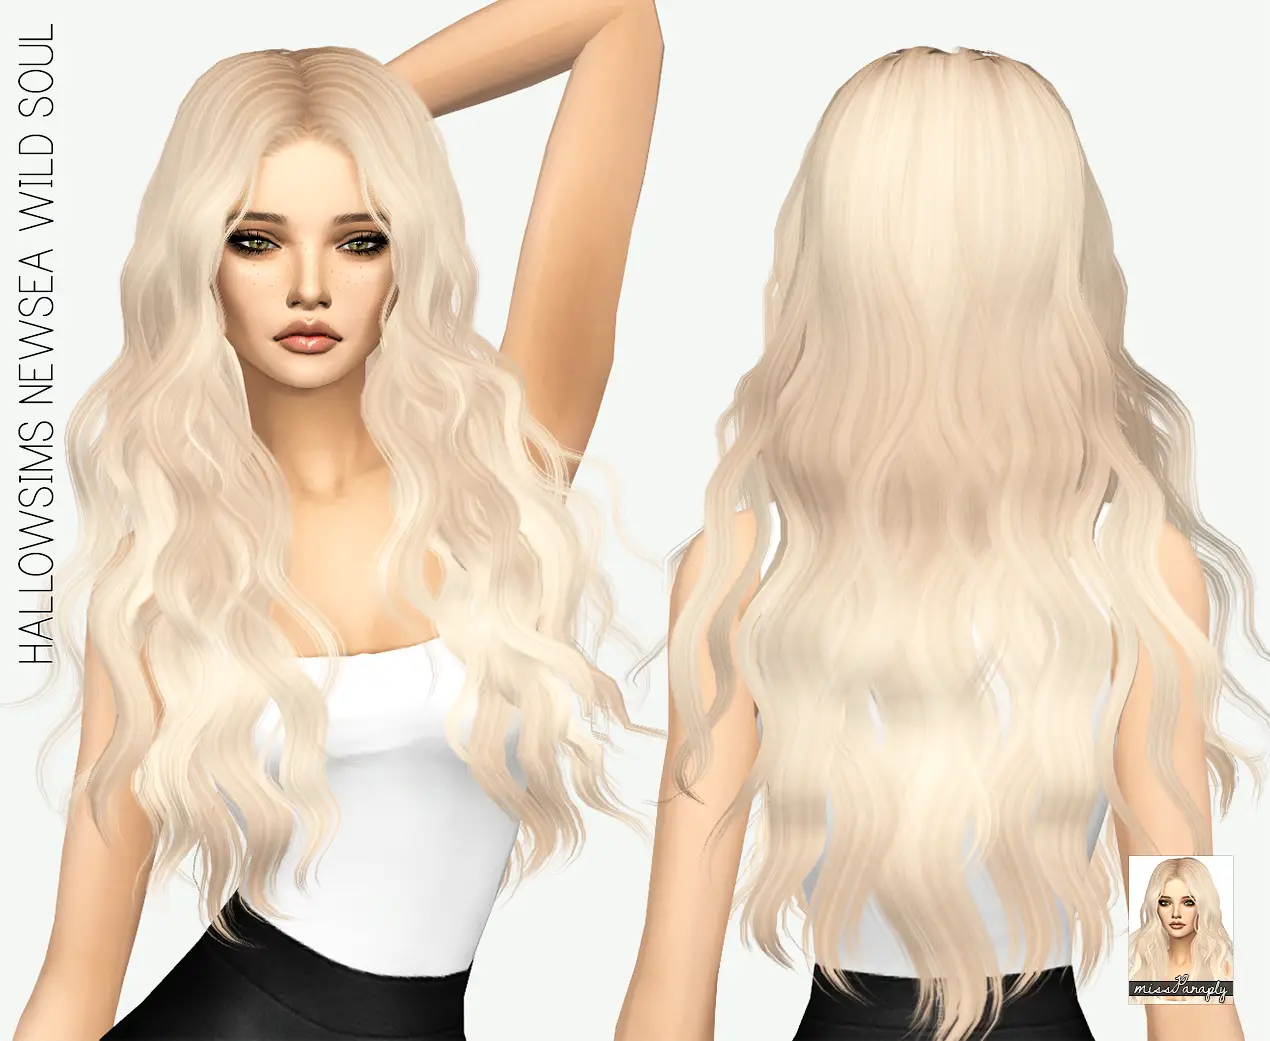 Sims 4 Light Blue Hair Female - wide 1